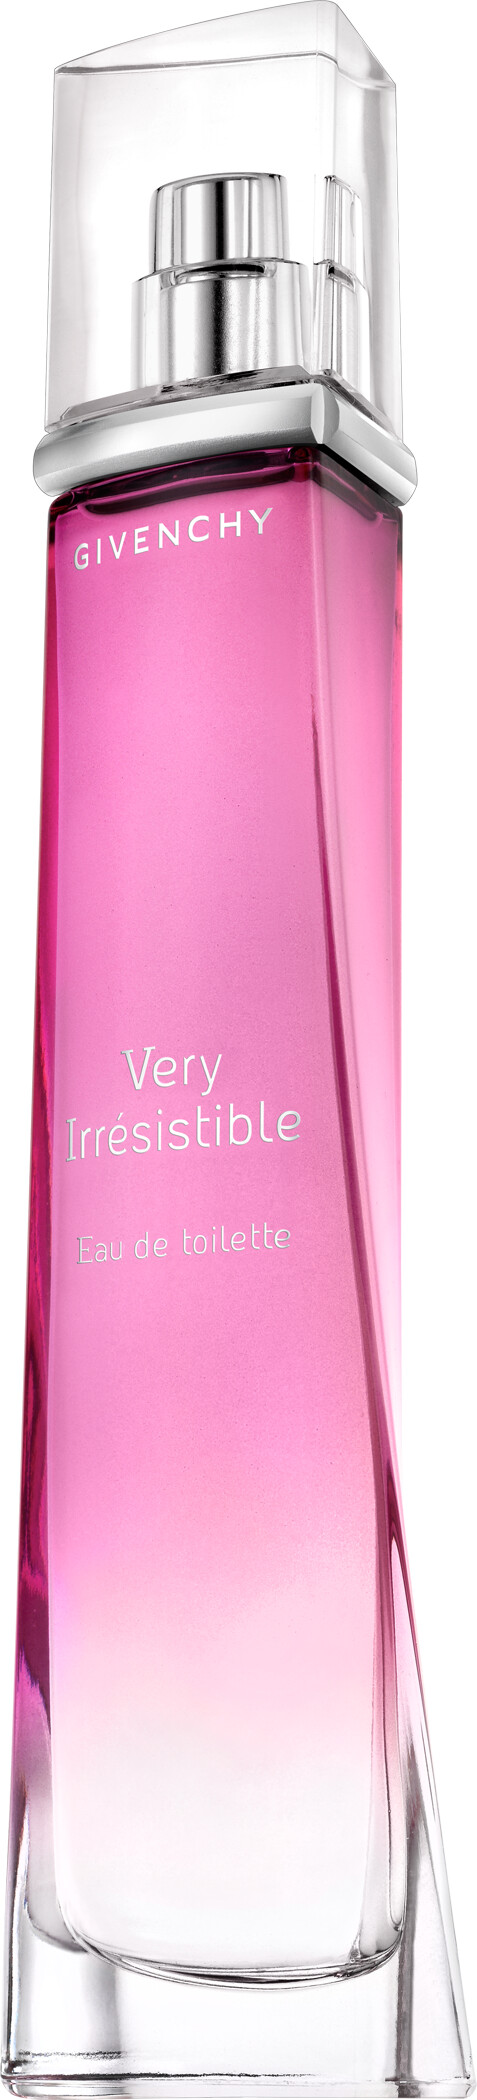 GIVENCHY Very Irresistible Eau de Toilette Spray 50ml